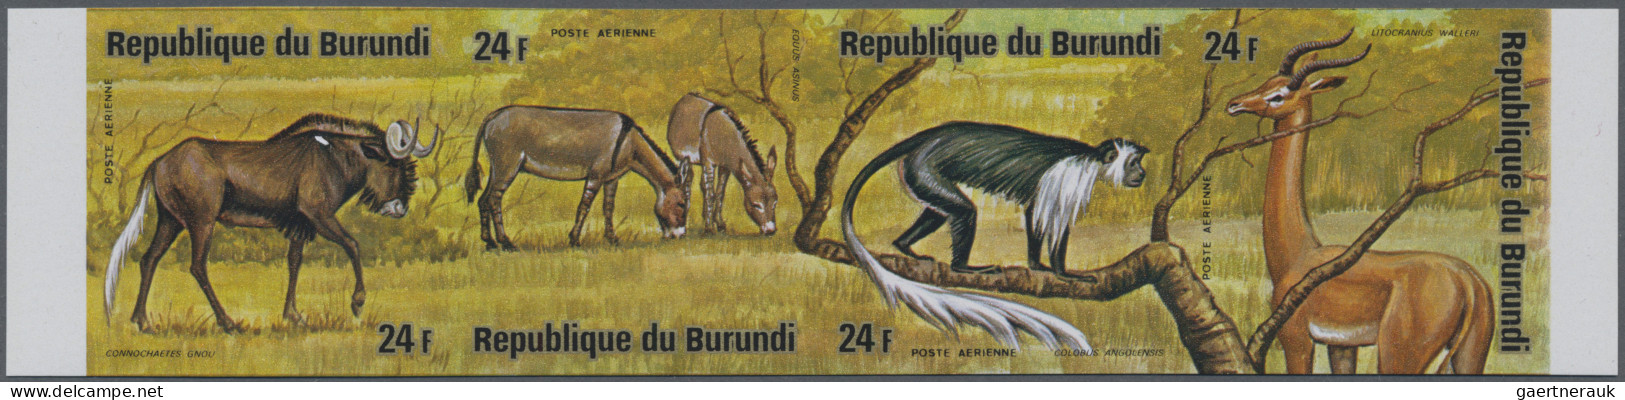 Burundi: 1975: African Animals, 12 imperforate mint se-tenats. (COB 1.500 €).